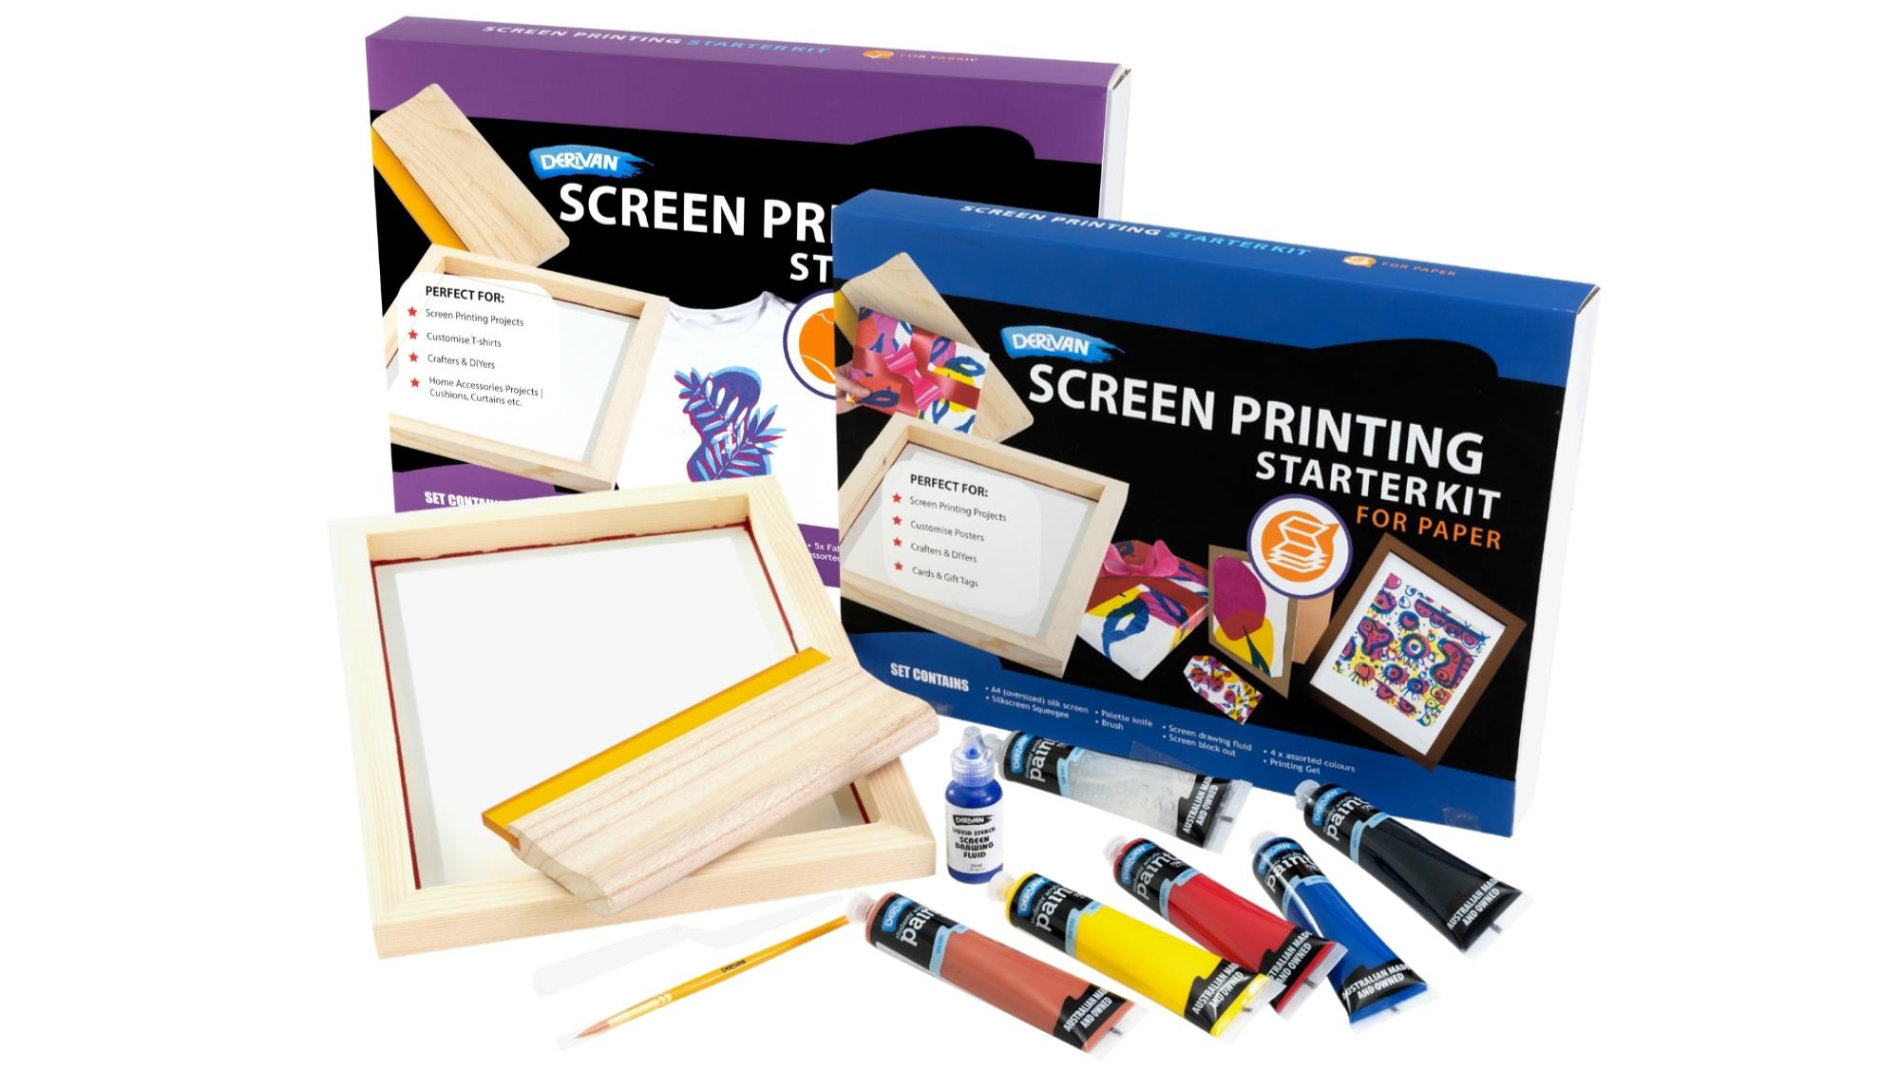 Creative Impulse Award 1st place: Derivan – Screen Printing Starter Kits